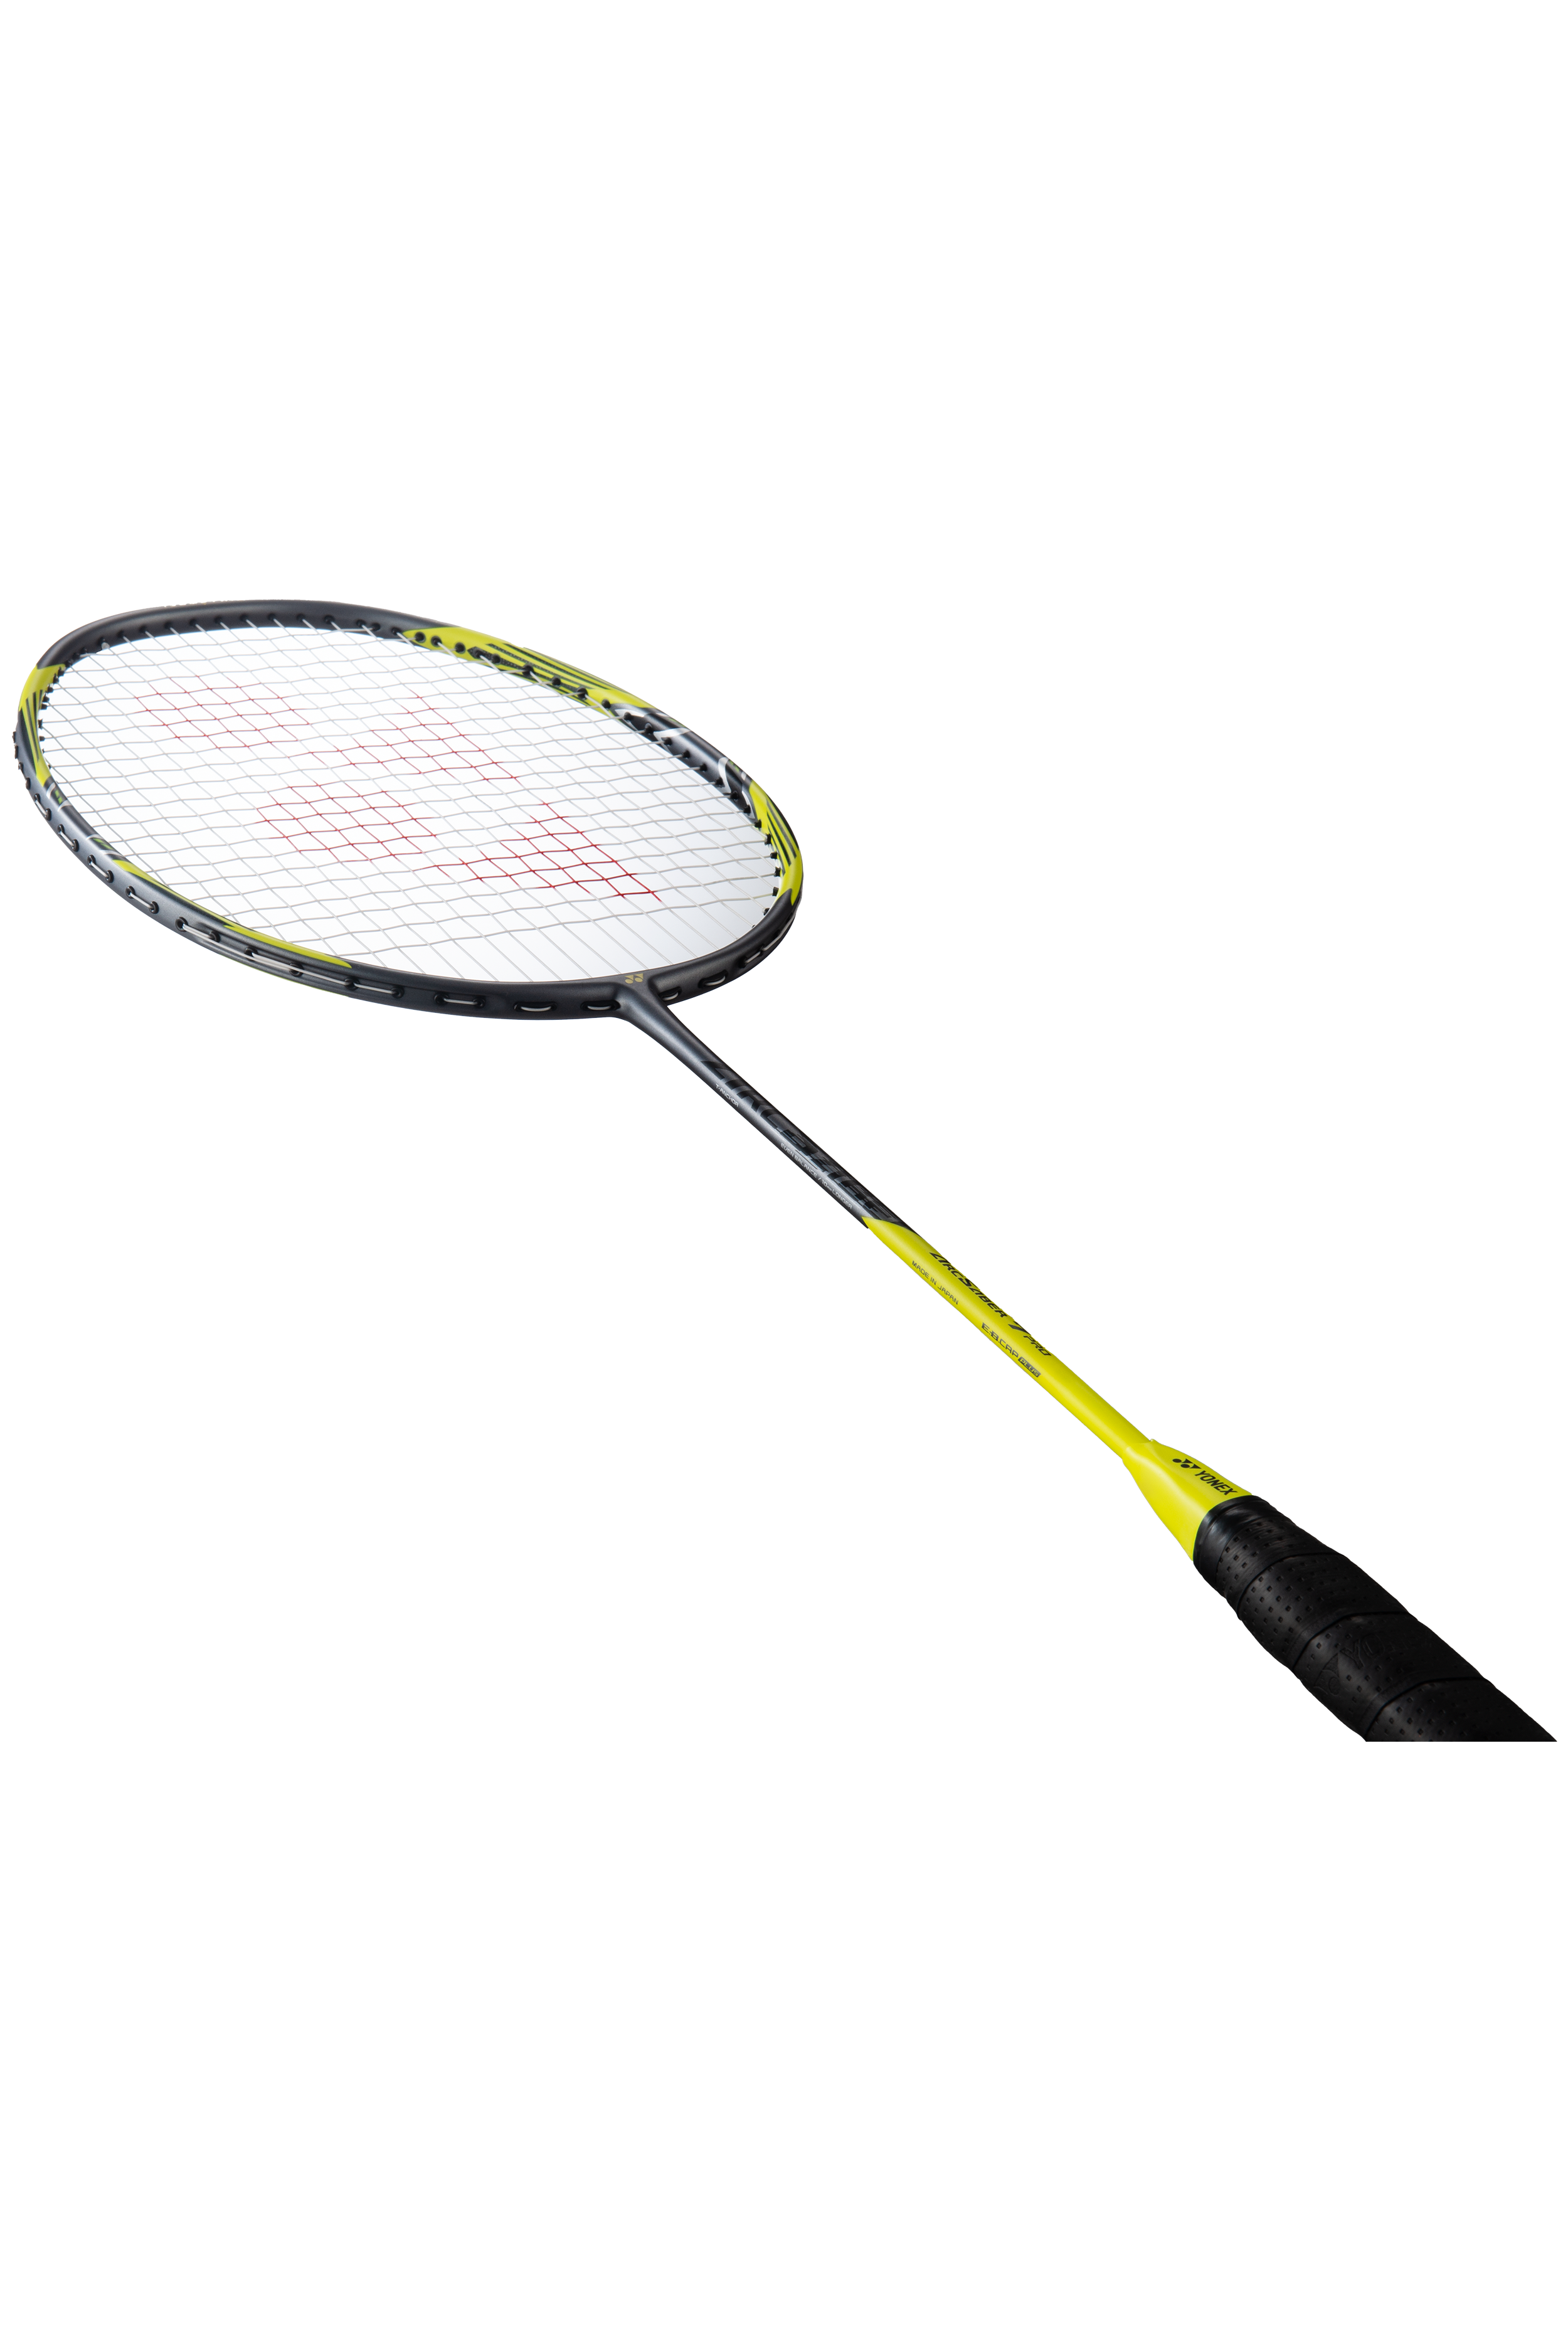 Yonex ArcSaber 7 Pro Badminton Racket Badminton Avenue